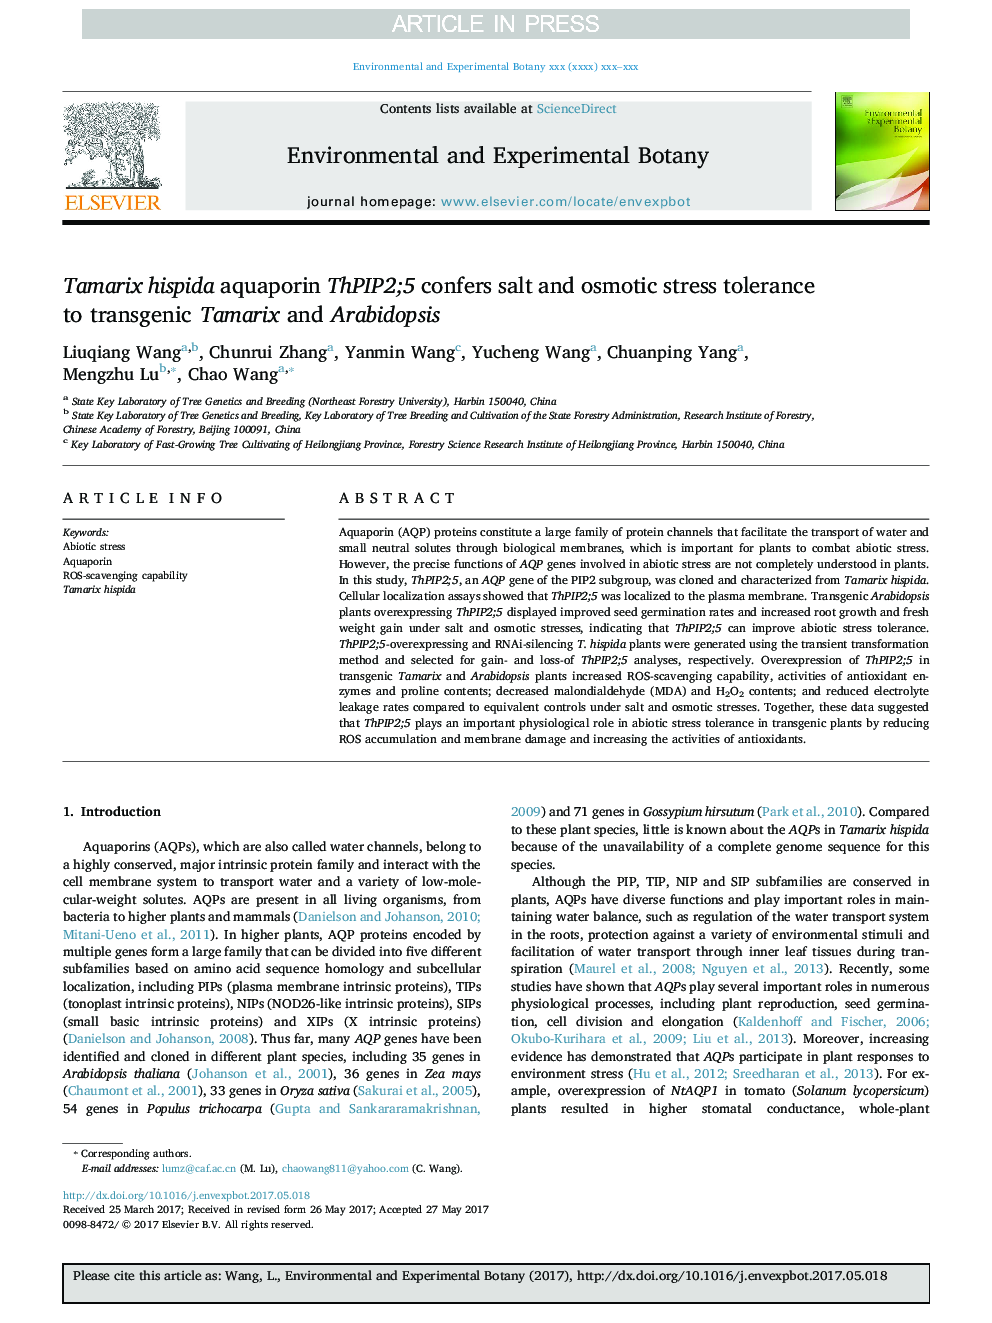 Tamarix hispida aquaporin ThPIP2;5 confers salt and osmotic stress tolerance to transgenic Tamarix and Arabidopsis